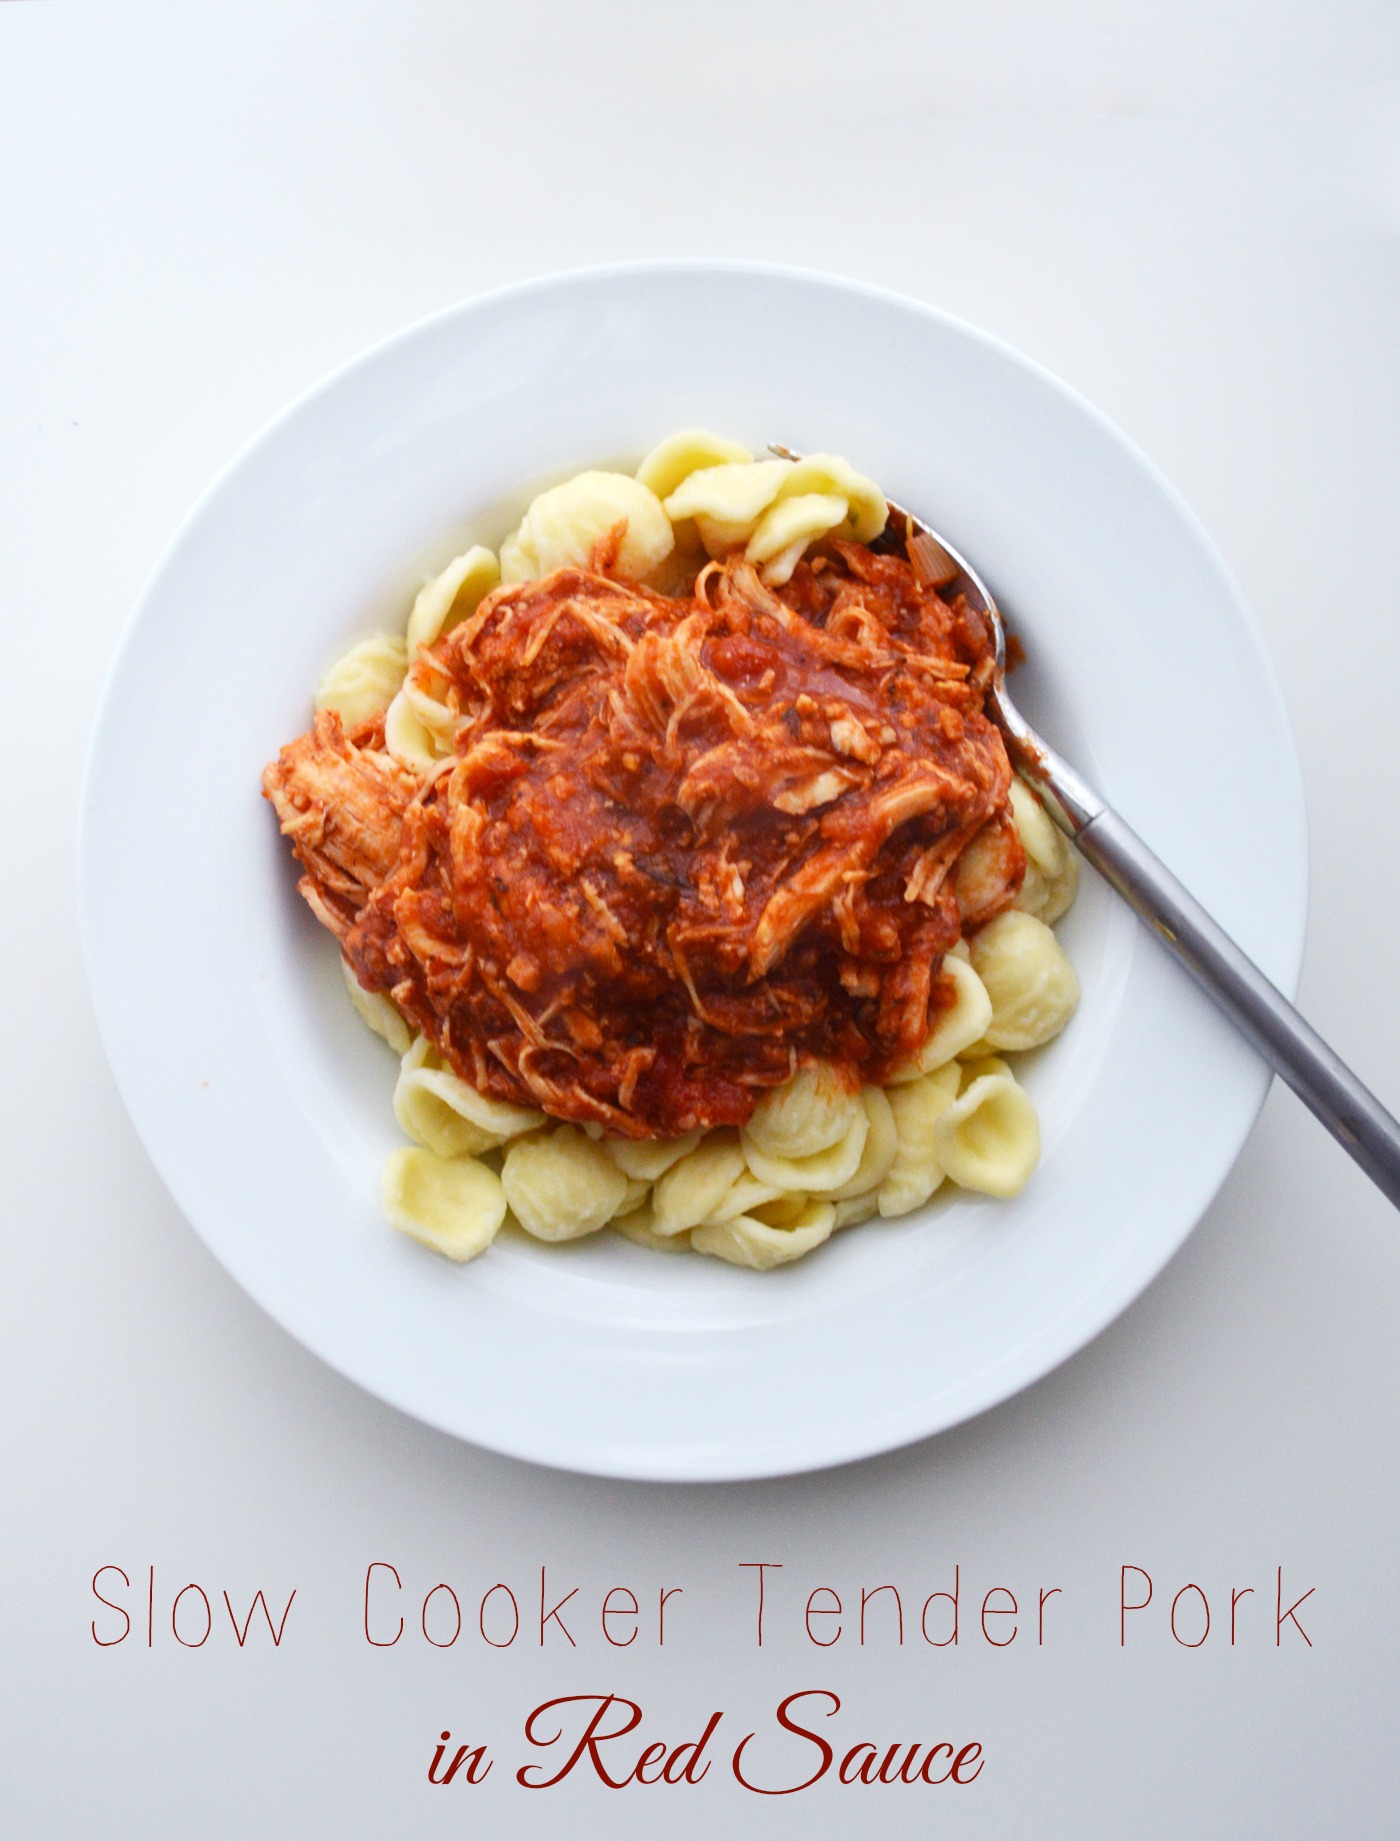 Slow cooker tender pork in red sauce